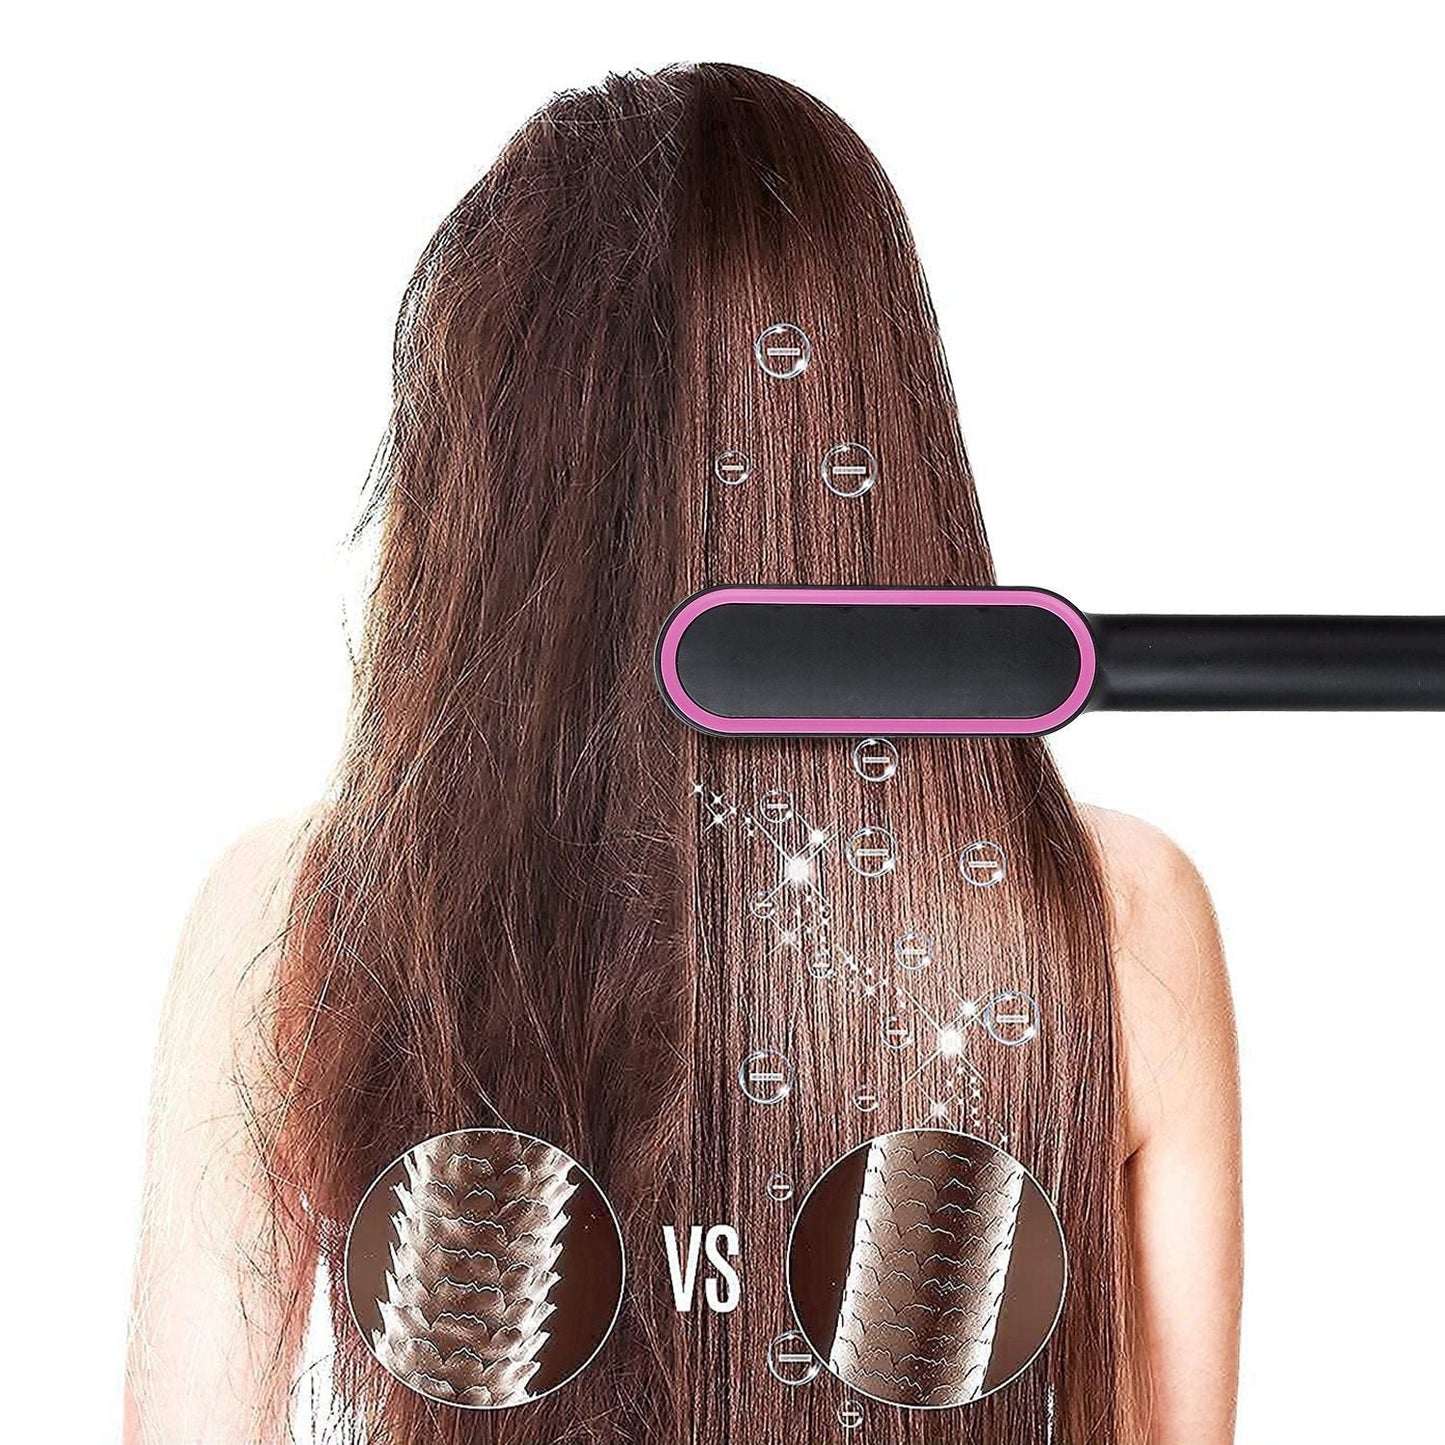 Electric Hair Straightener Brush Straightening Curler Brush Hot Comb 5